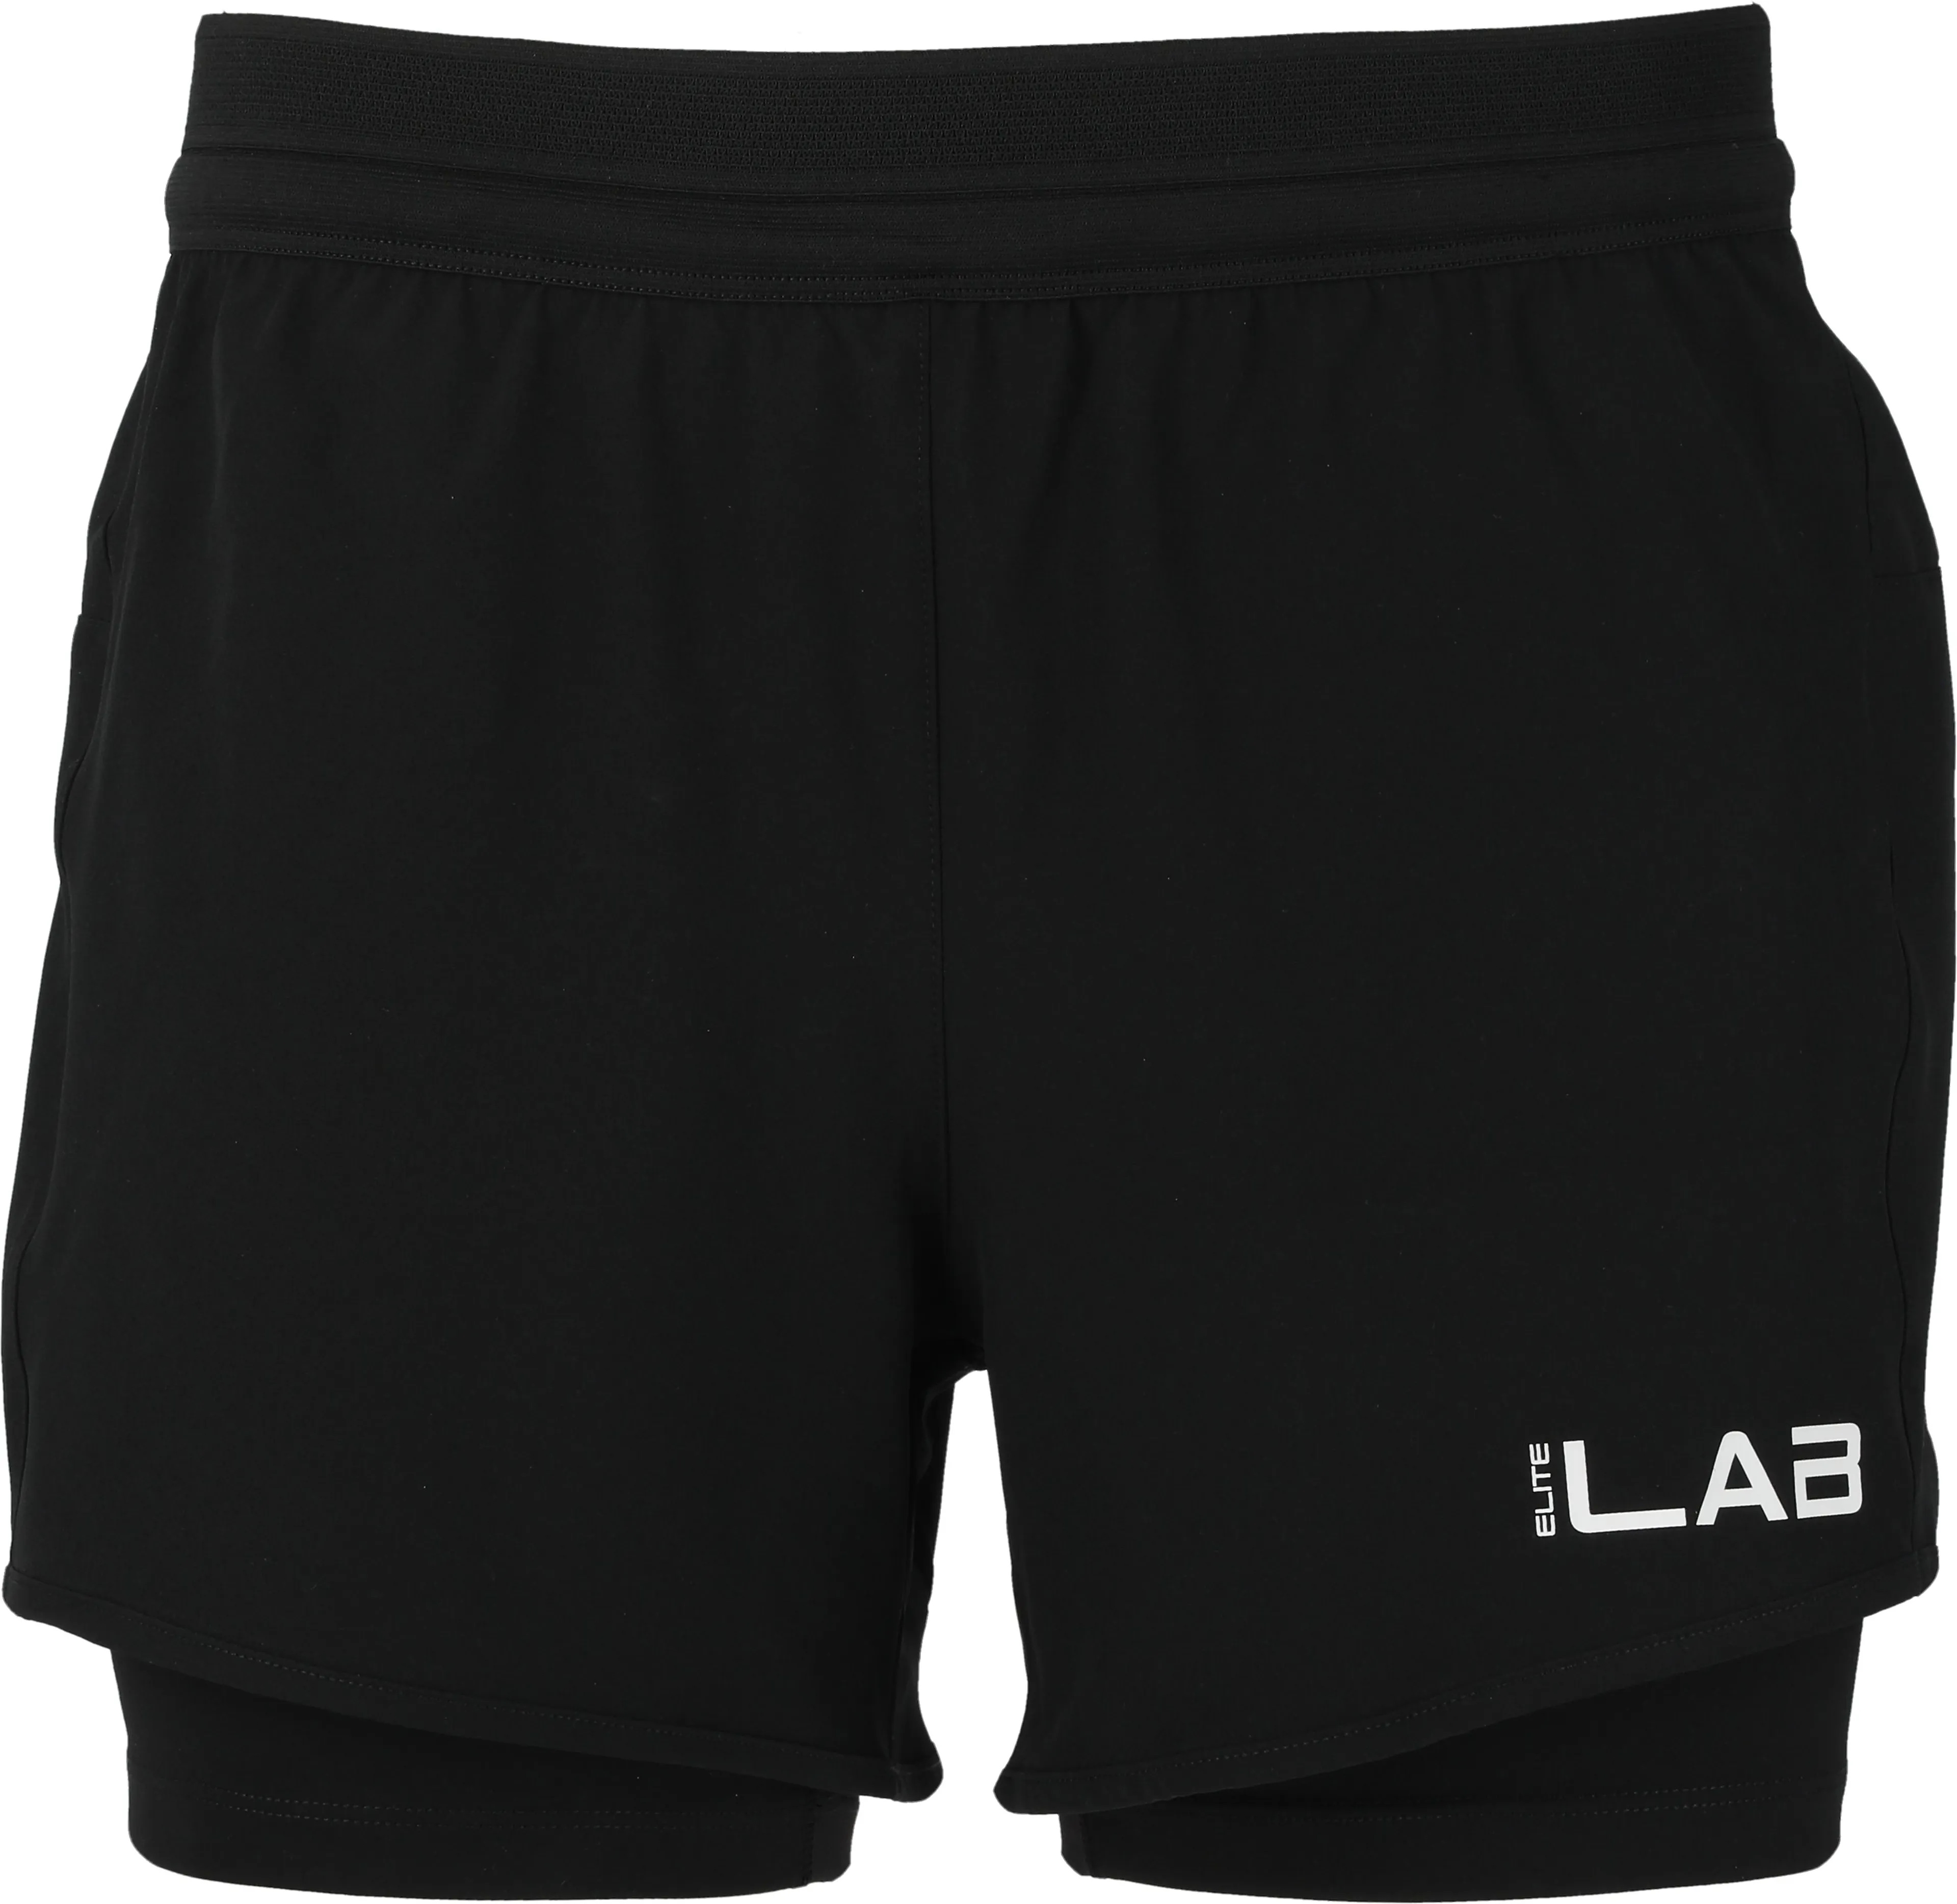 Elite Lab Core Lightweight 2-in-1 Shorts